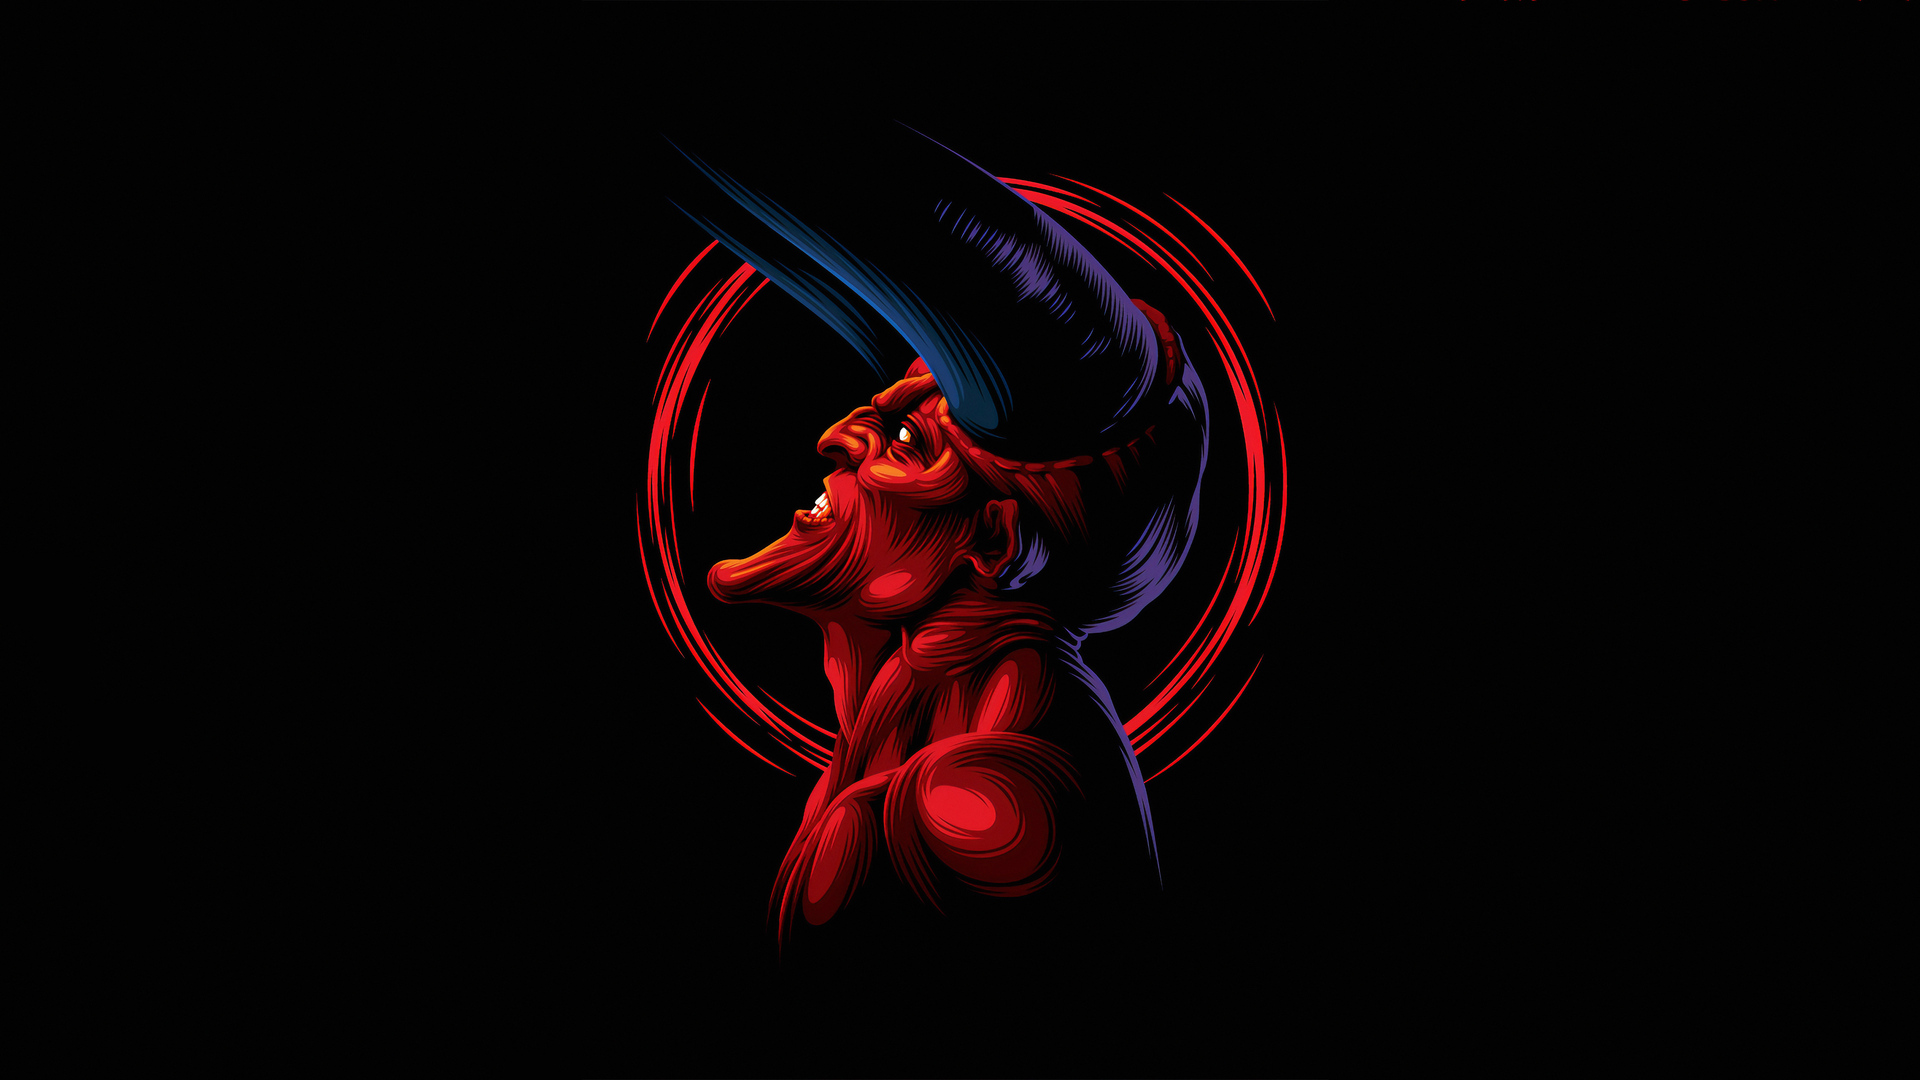 Abstract KDE Plasma Demon Devil DESKTOP WALLPAPER 